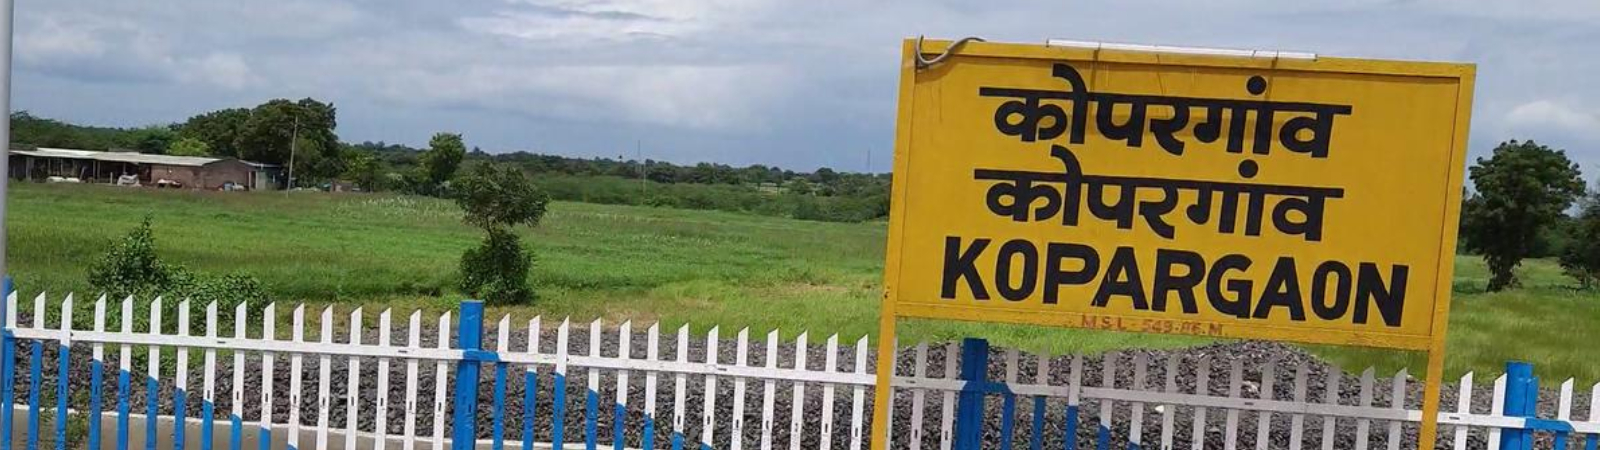 Kopargoan Station Banner